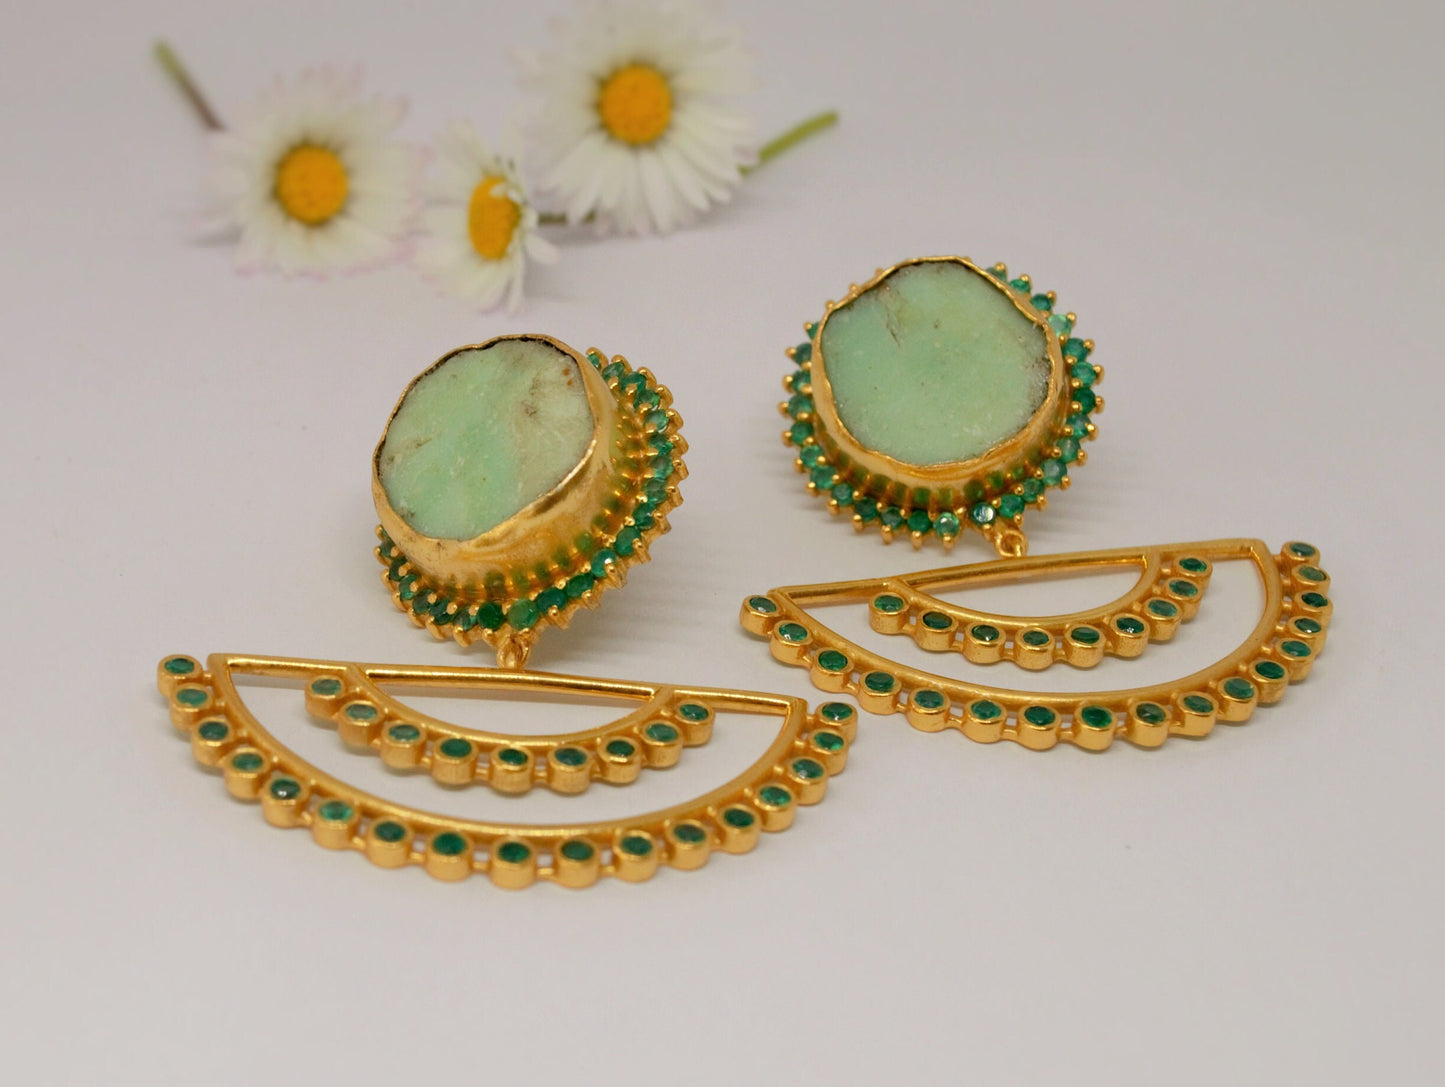 Chrysoprase Earrings, Green Onyx Earrings, Unique Gemstone Earrings, Sterling Silver Earrings, Gold Plated Earrings, Birthday Gifts For Her